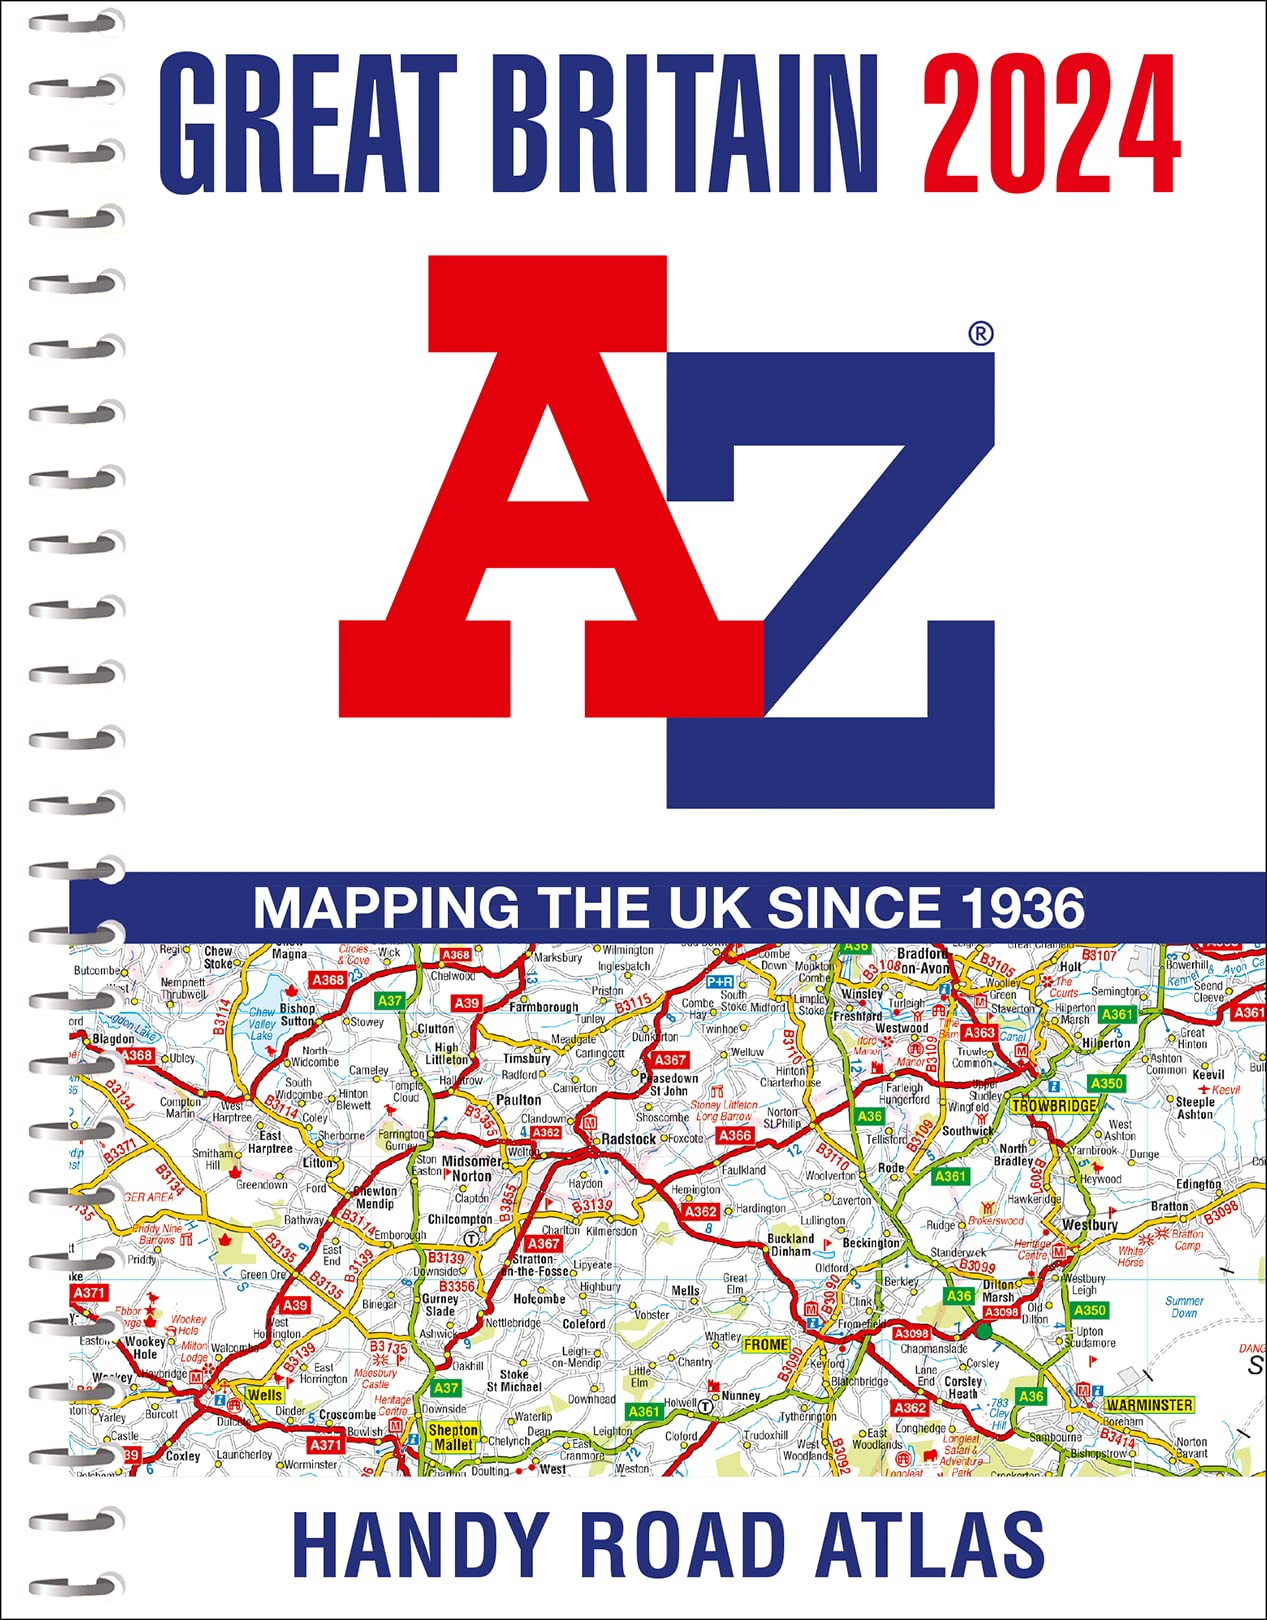 Great Britain Handy Road Atlas by A-Z Maps (2024)